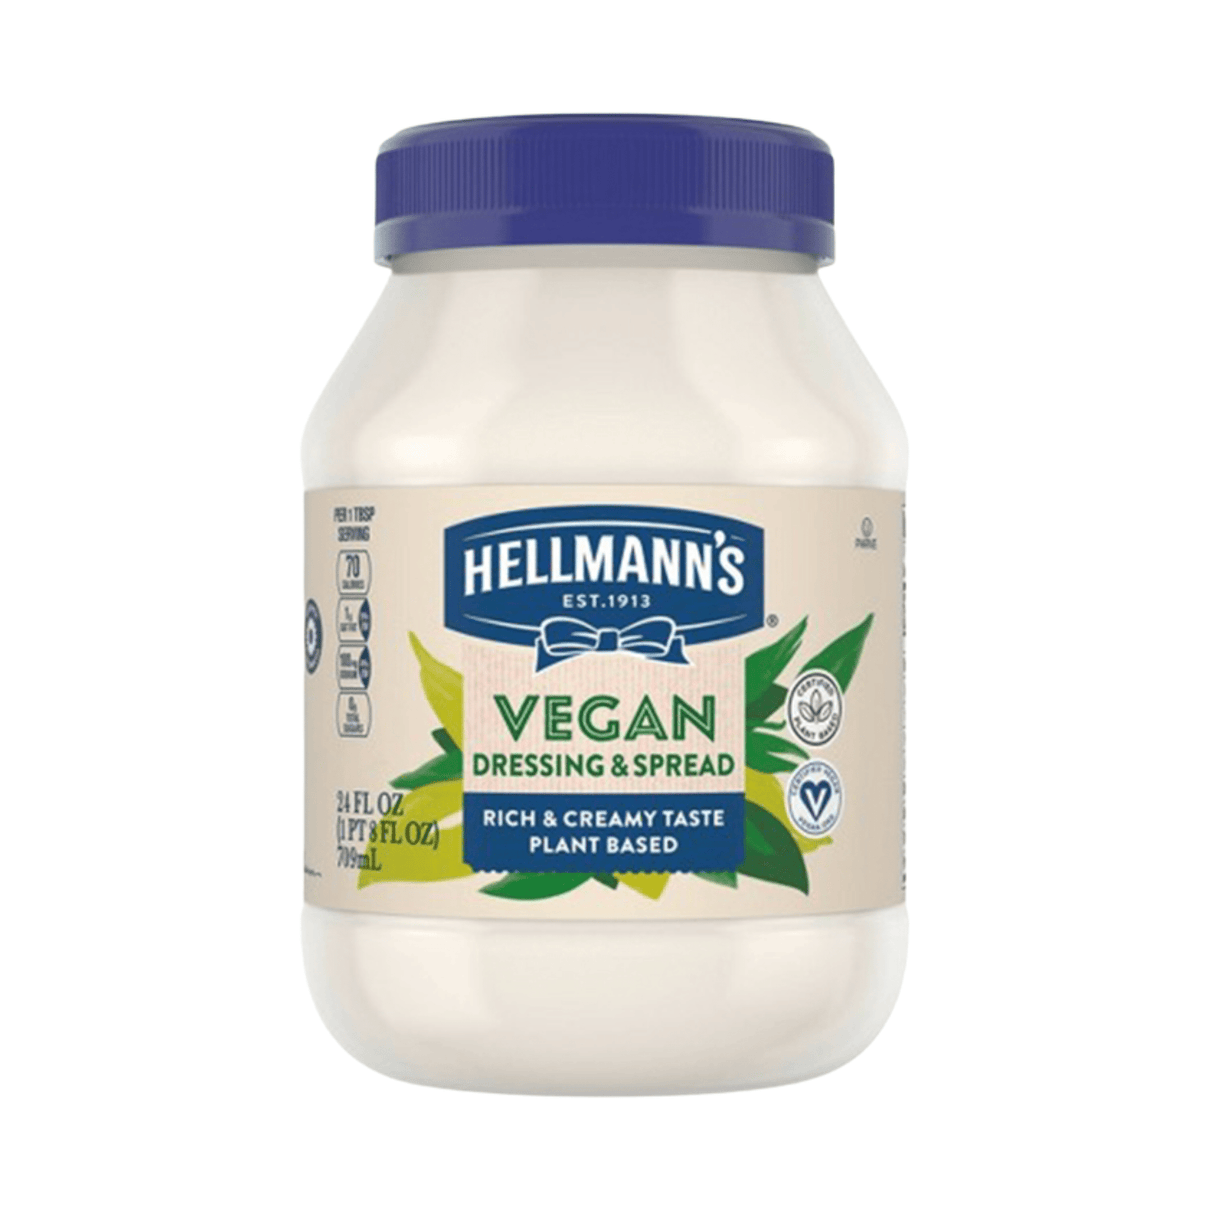 Hellmann's Vegan Dressing & Spread